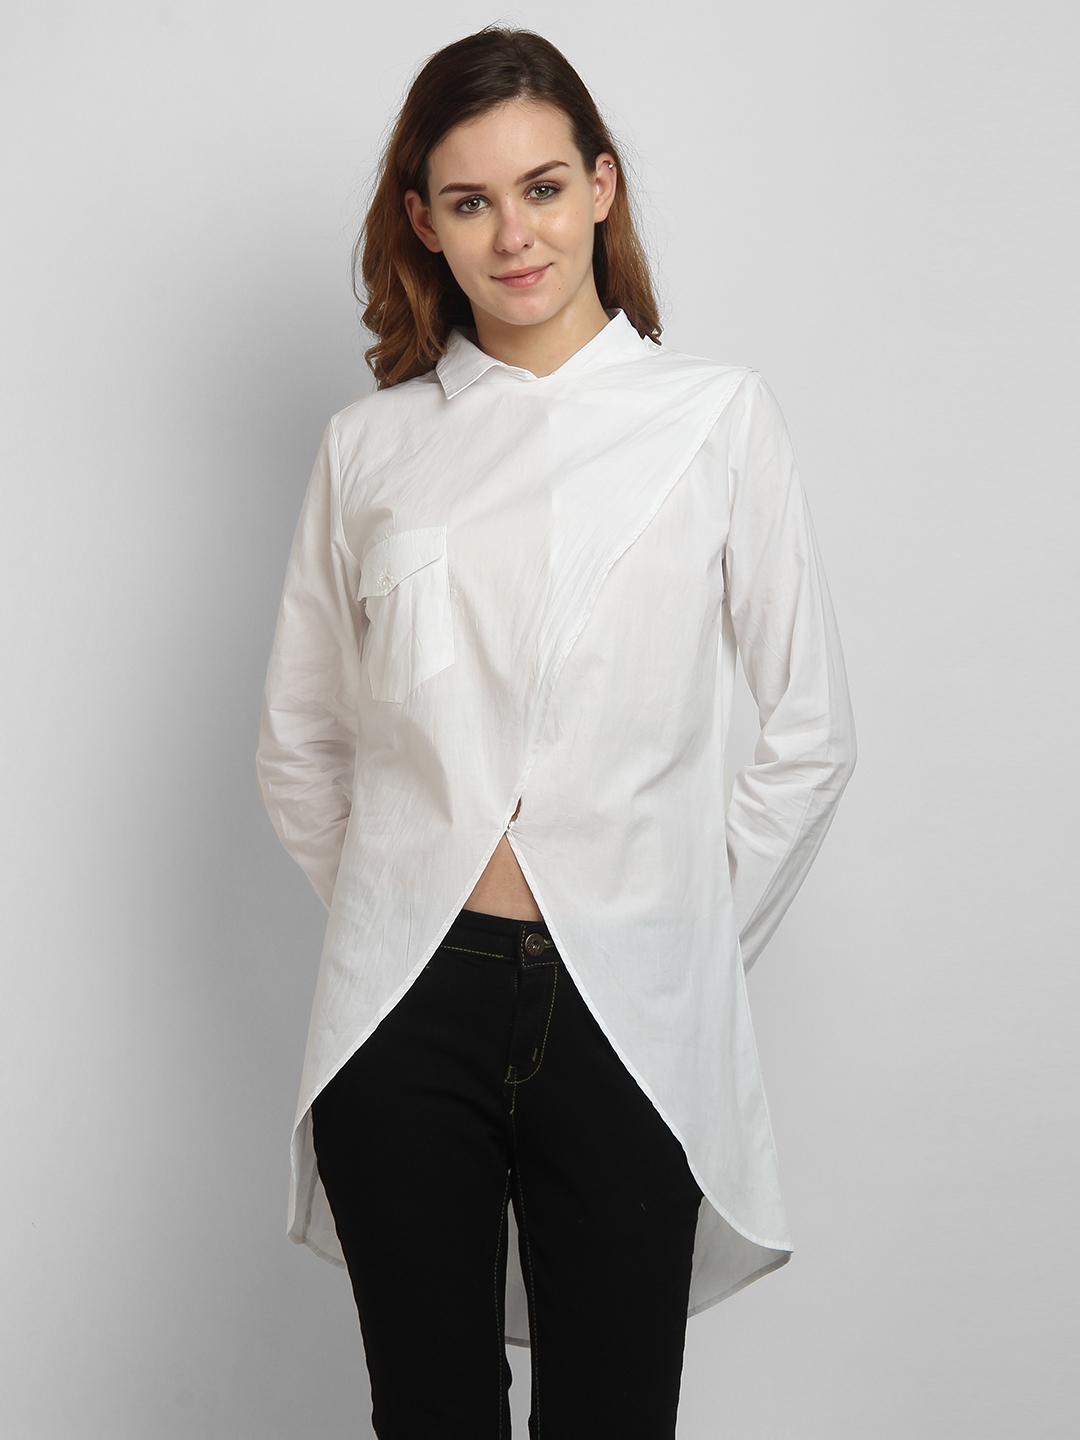 Buy La Loft Women White Regular Fit Solid Casual Shirt Shirts For